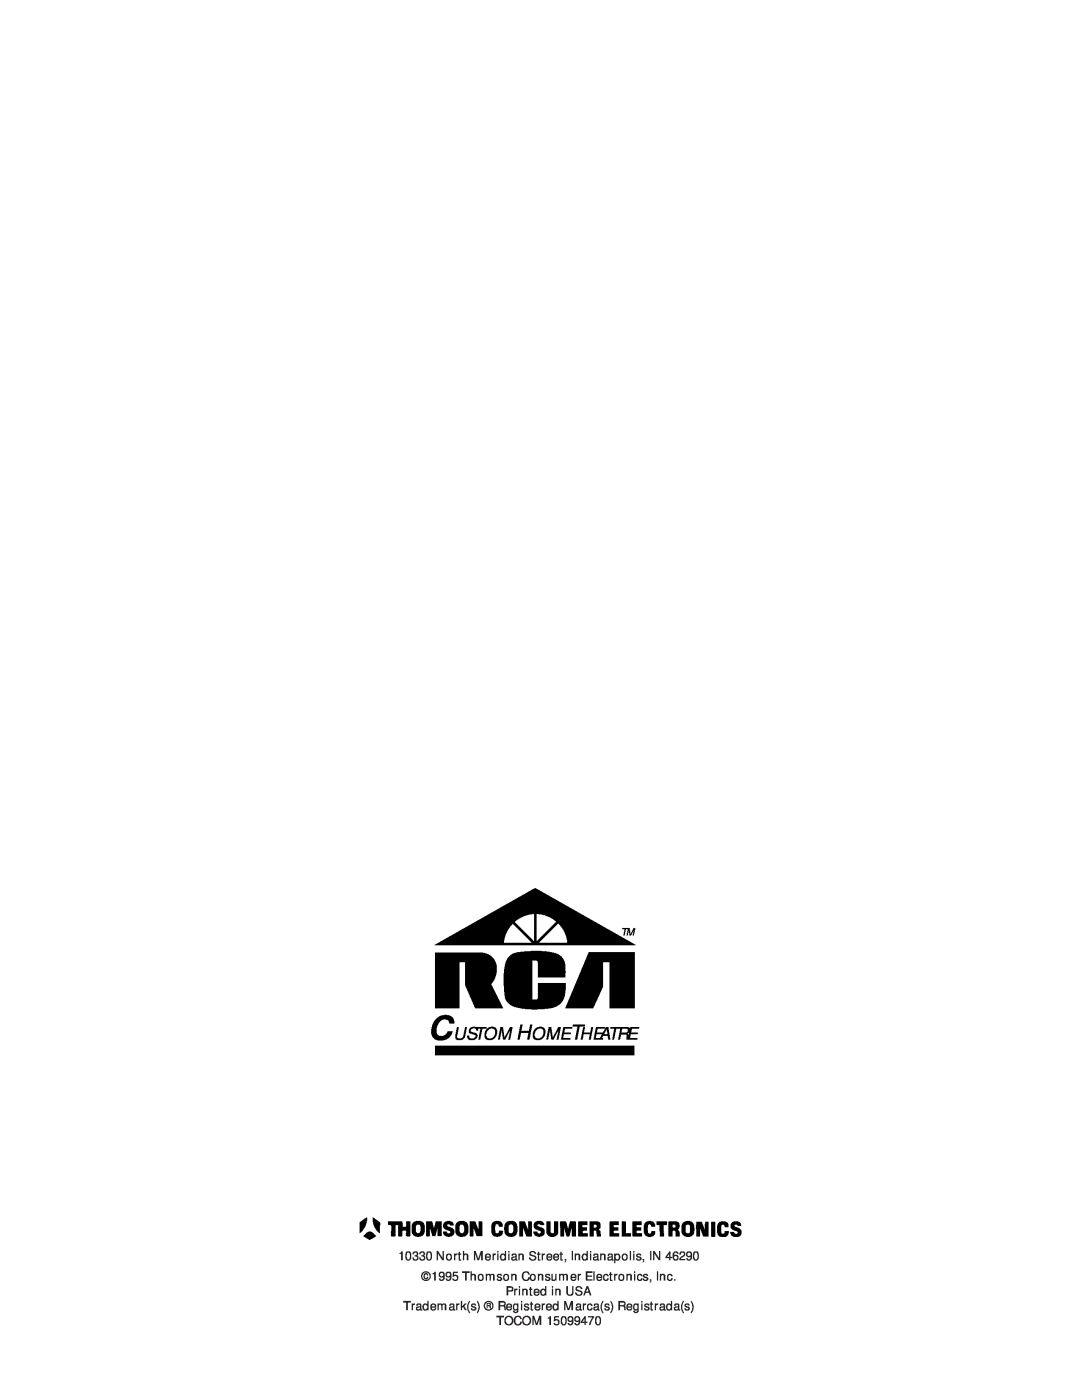 RCA HT60903BD, HT35713BD Custom Hometheatre, North Meridian Street, Indianapolis, IN, Thomson Consumer Electronics, Inc 